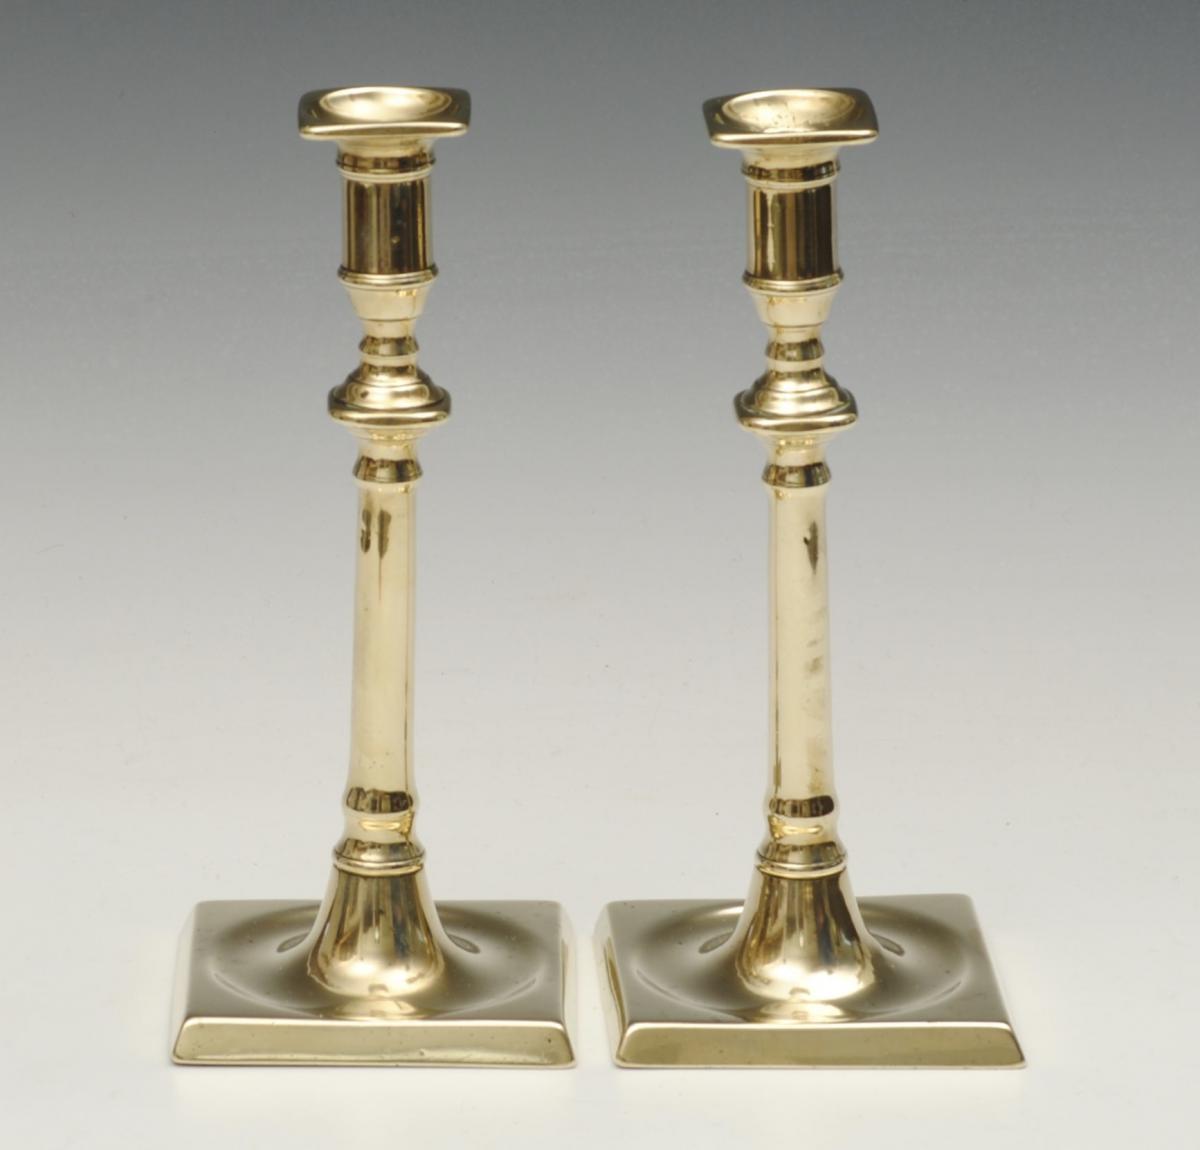 18th century square based brass candlesticks